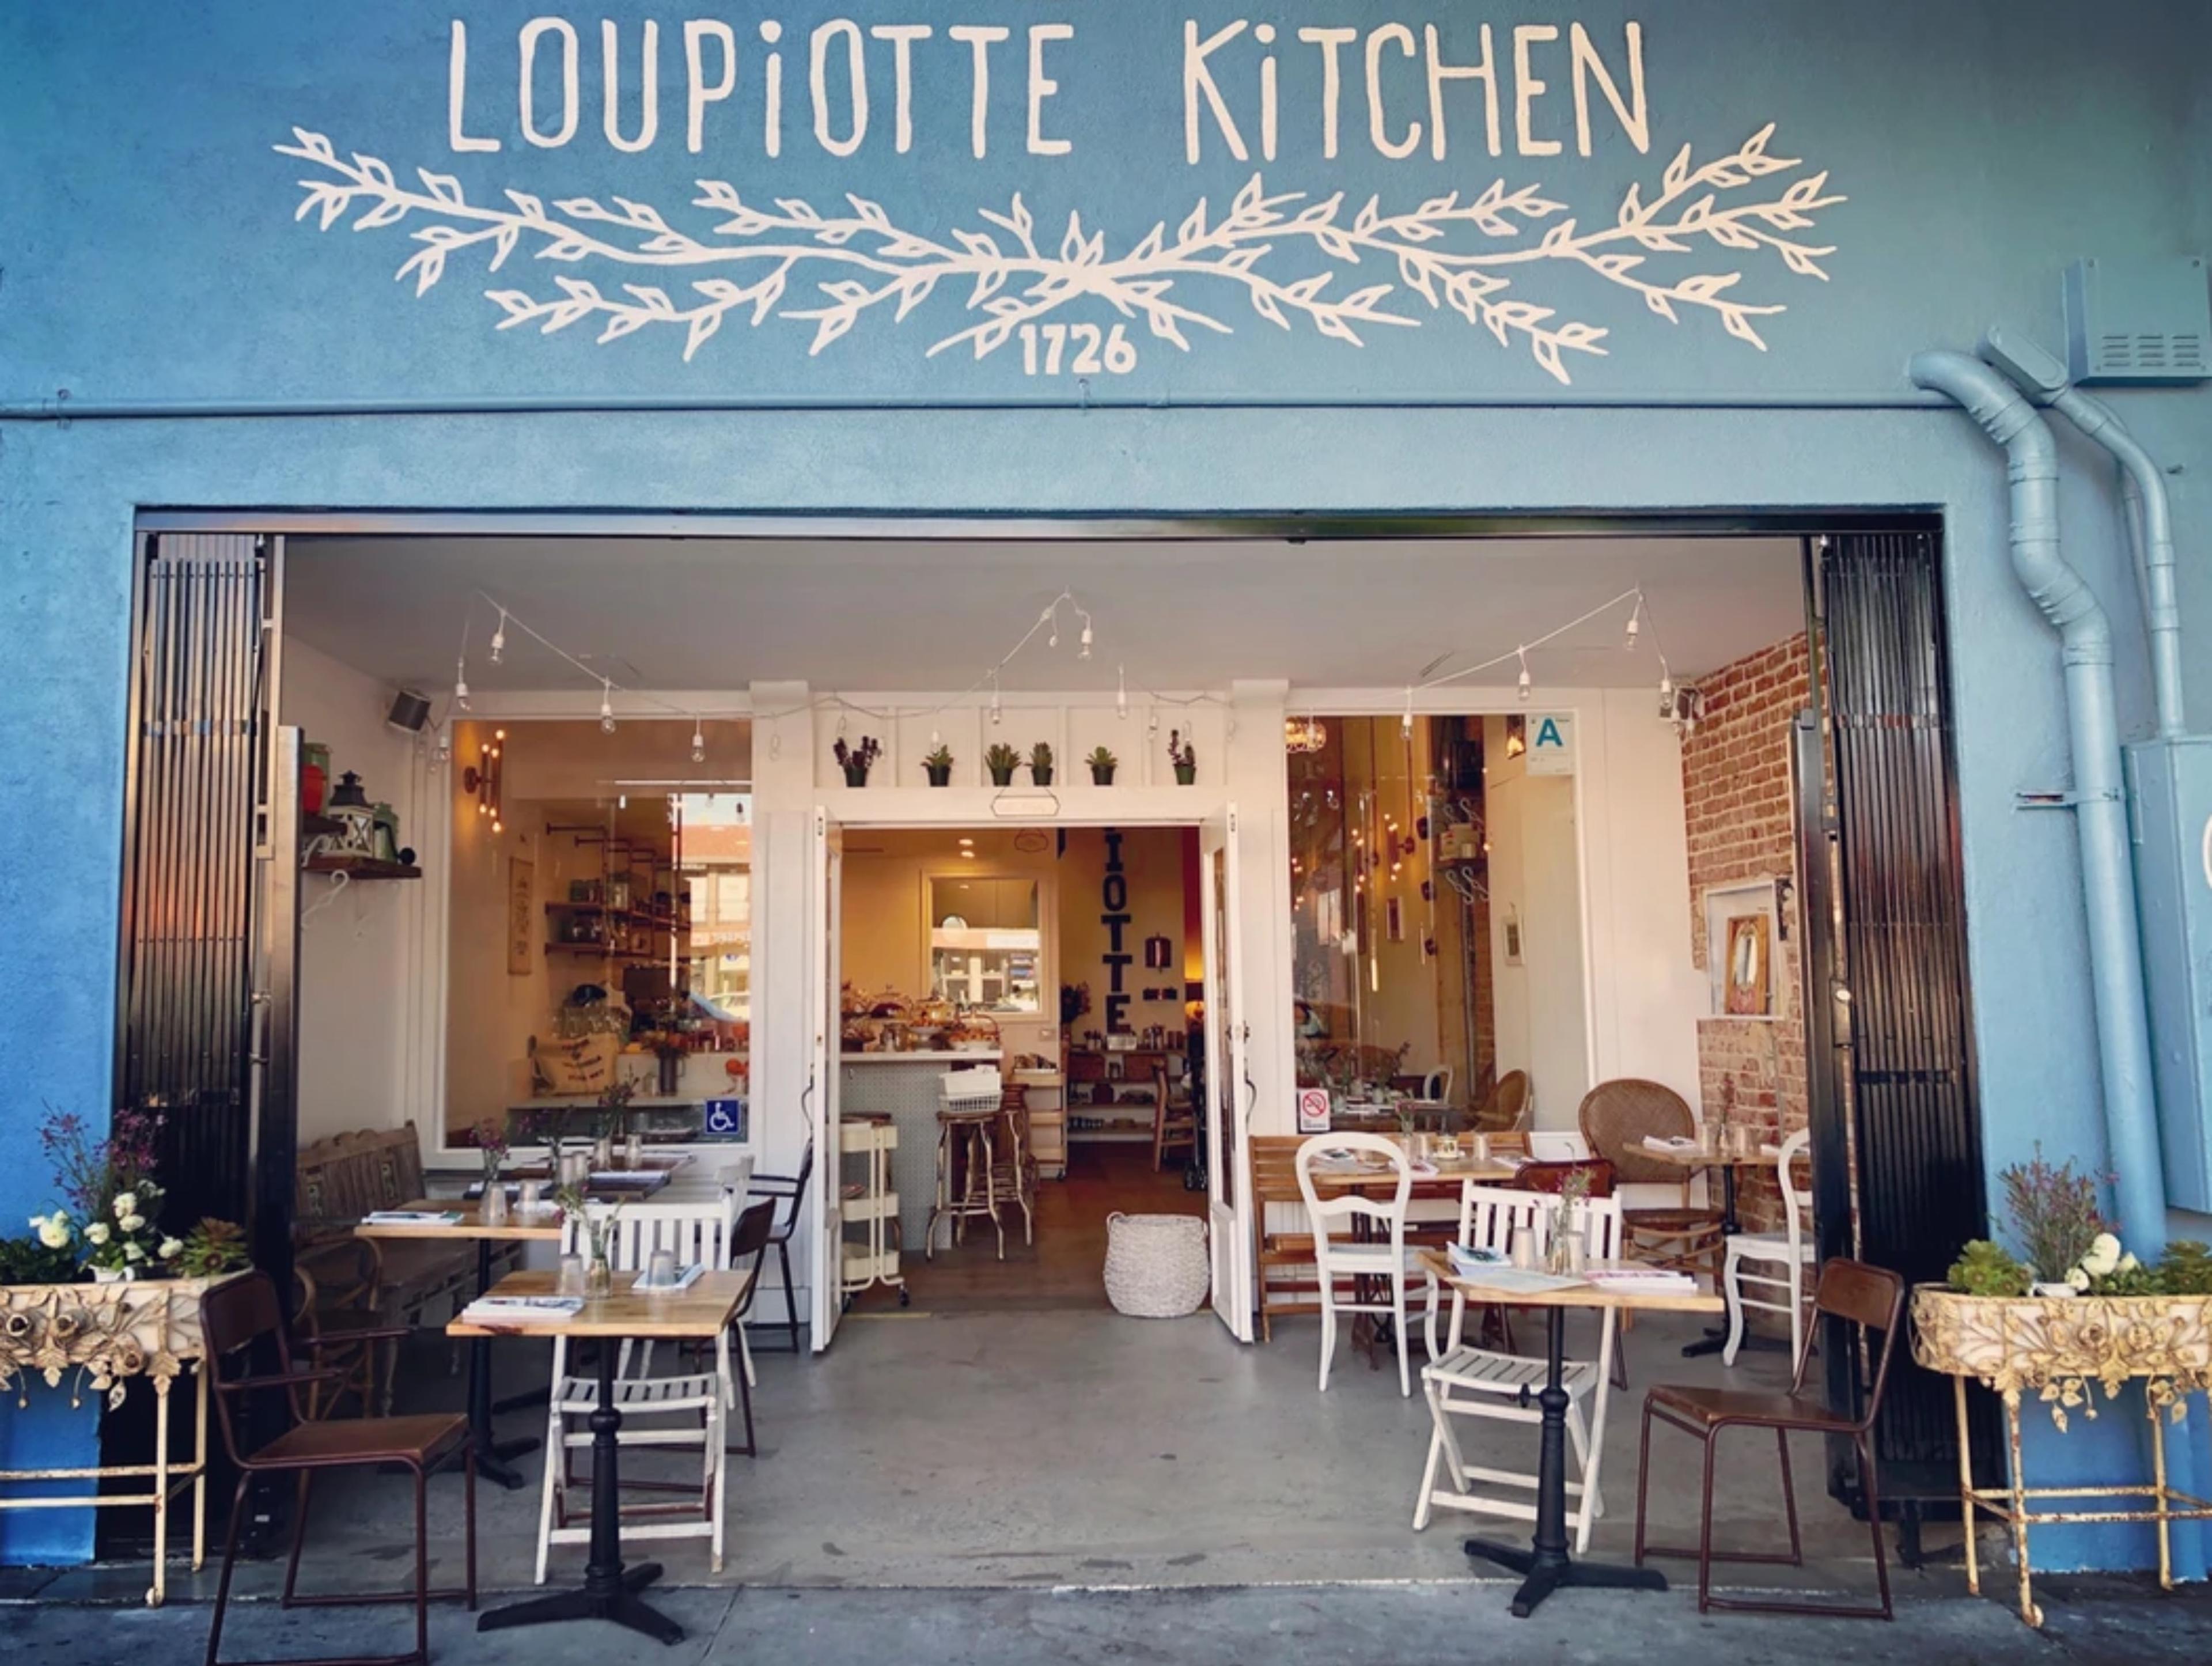 Loupiotte Kitchen